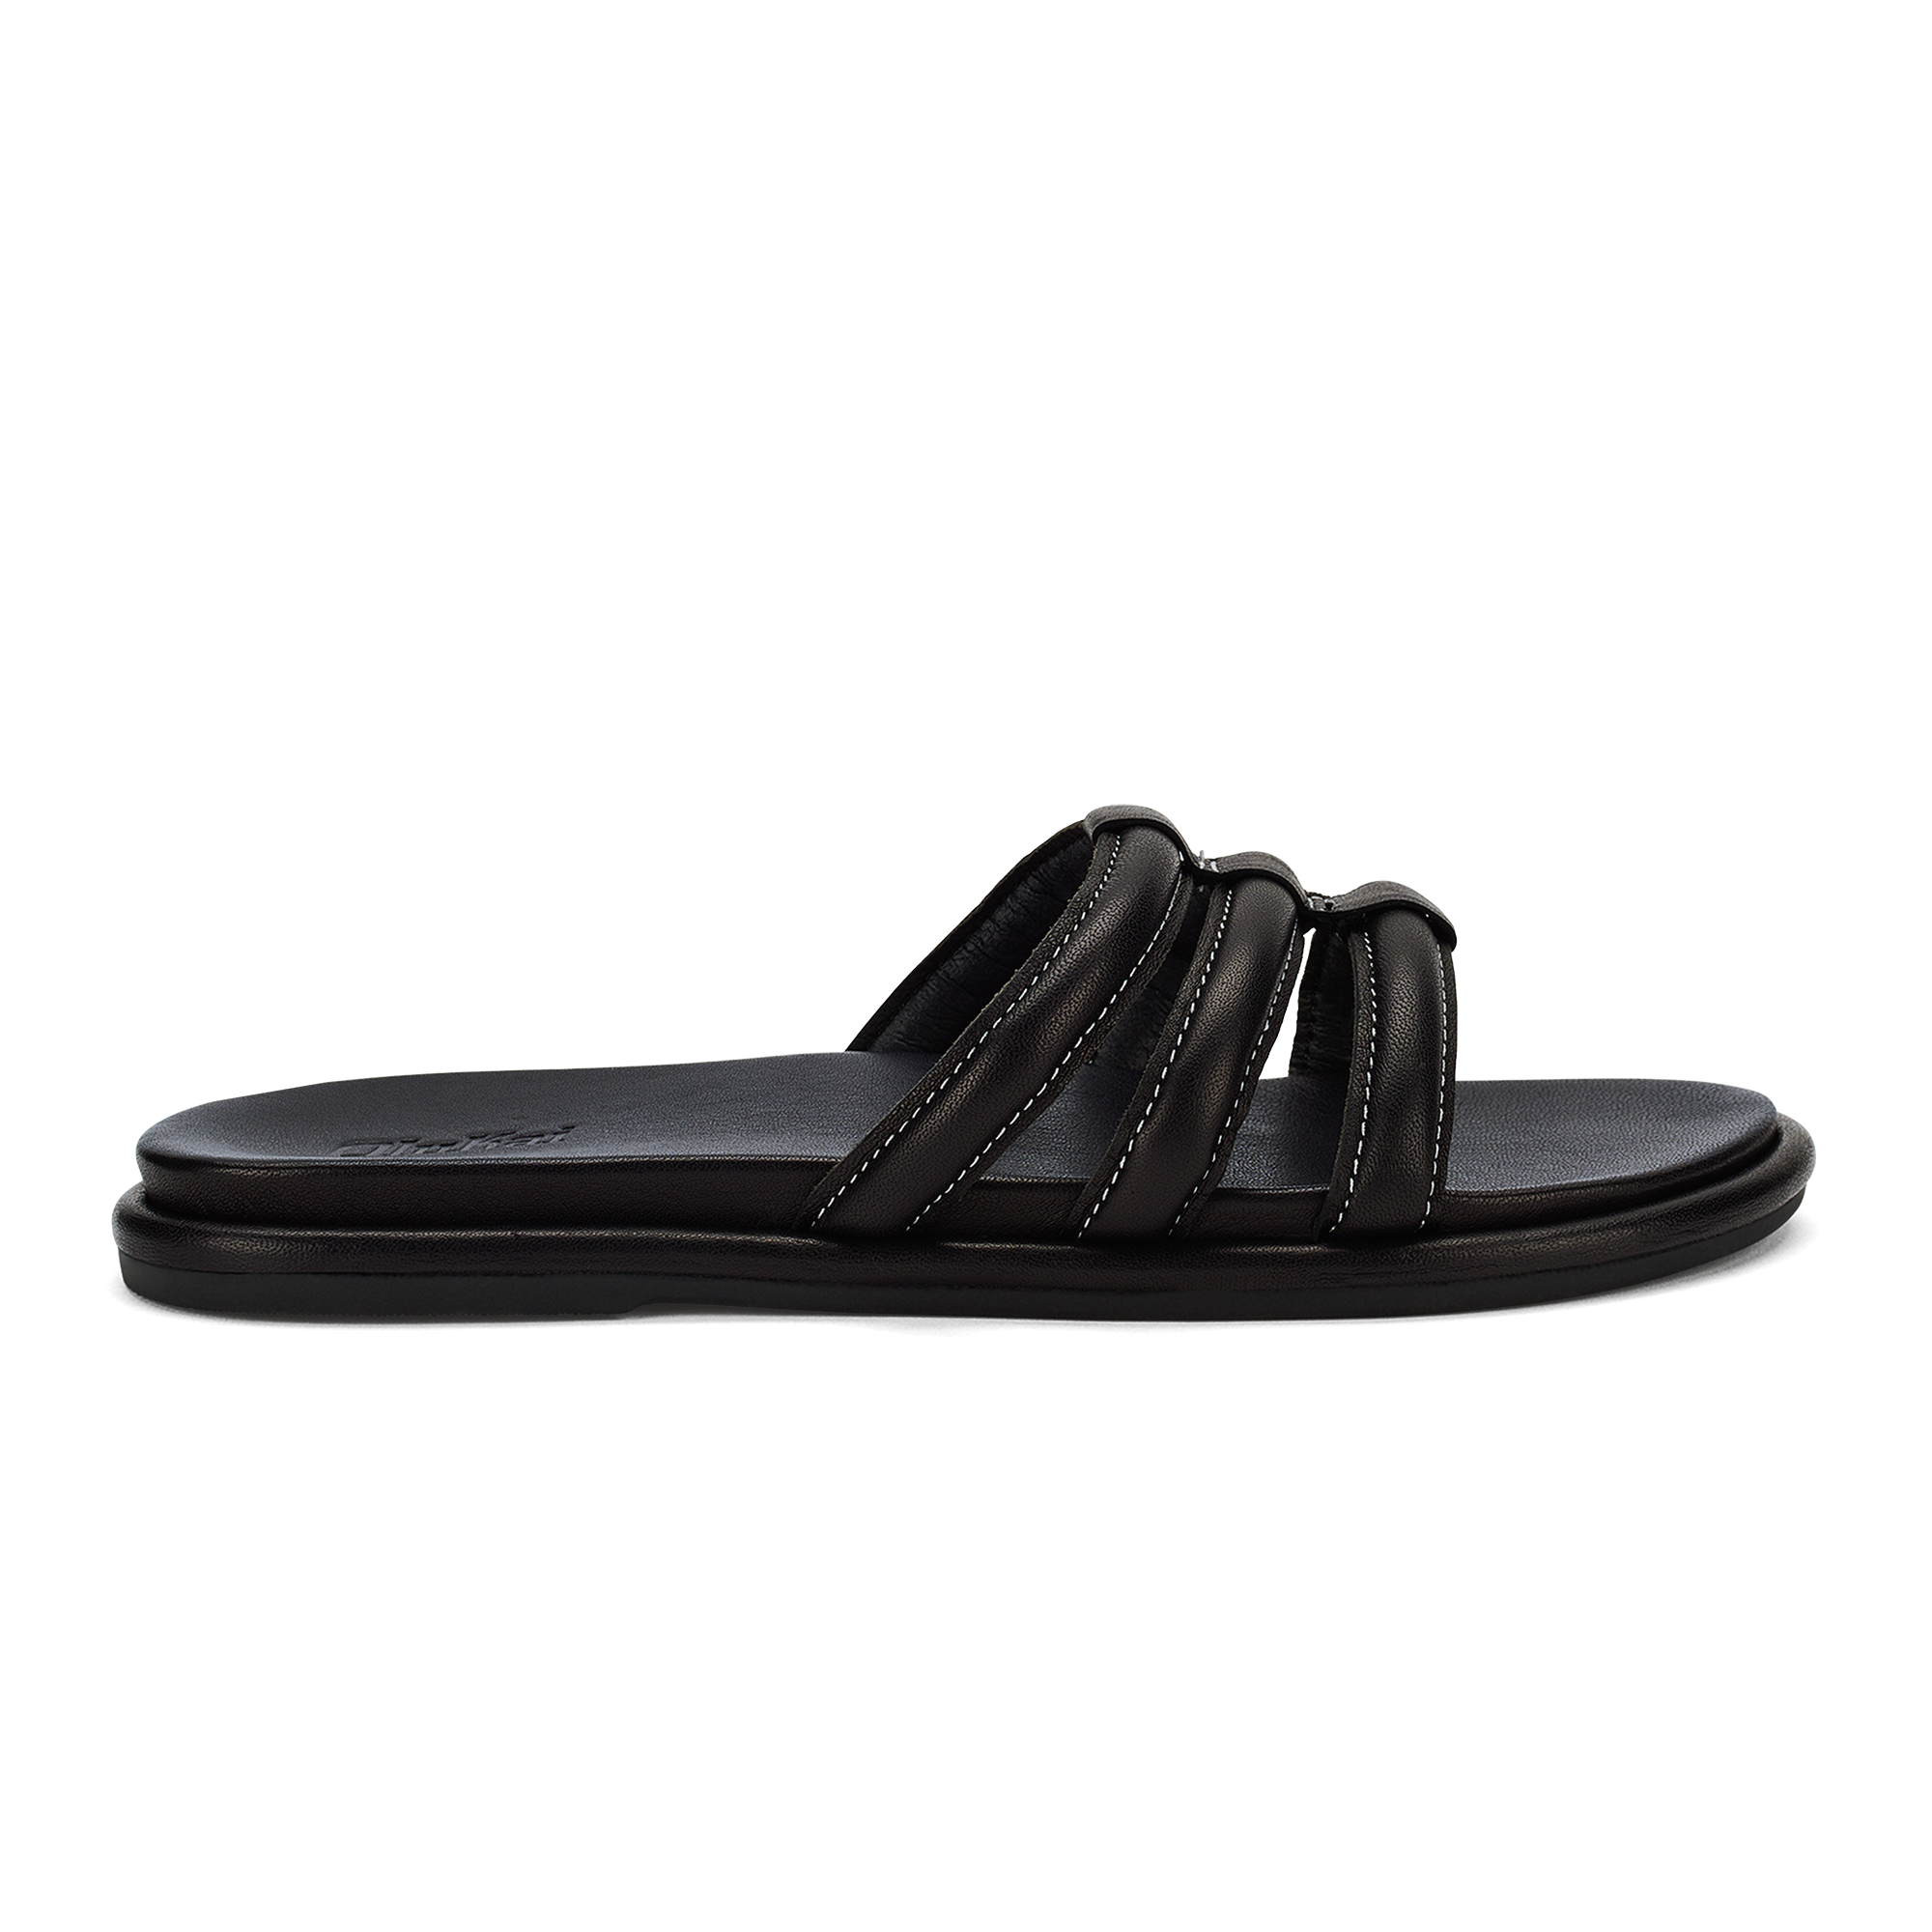 Tiare Slide Women’s Leather Slide Sandals - Black | OluKai